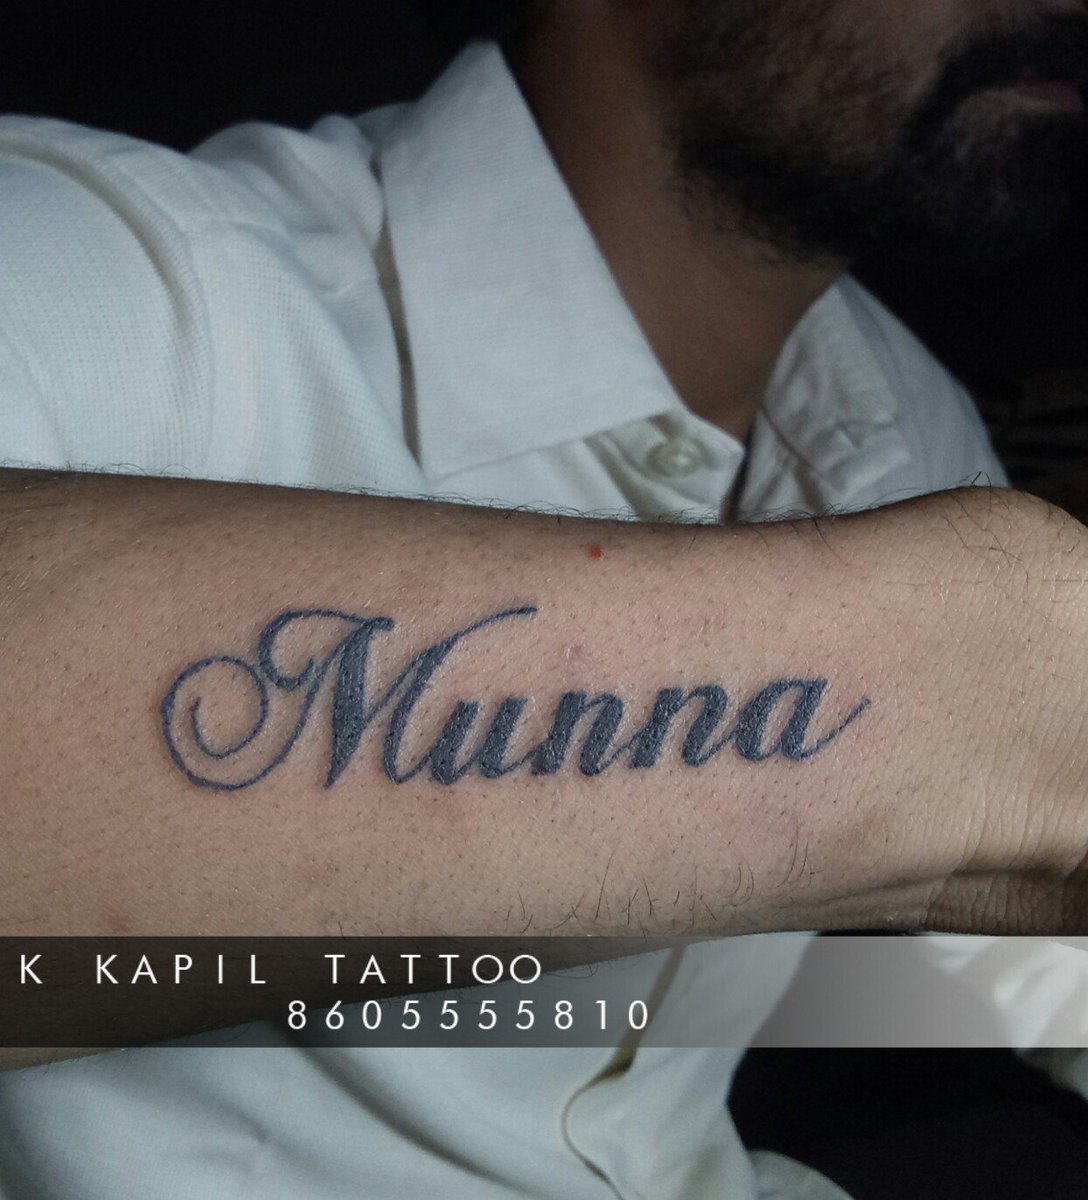 Tattoo uploaded by Vipul Chaudhary • Portrait tattoo |Face tattoo |Mom dad  face tattoo |Mom dad tattoo design • Tattoodo